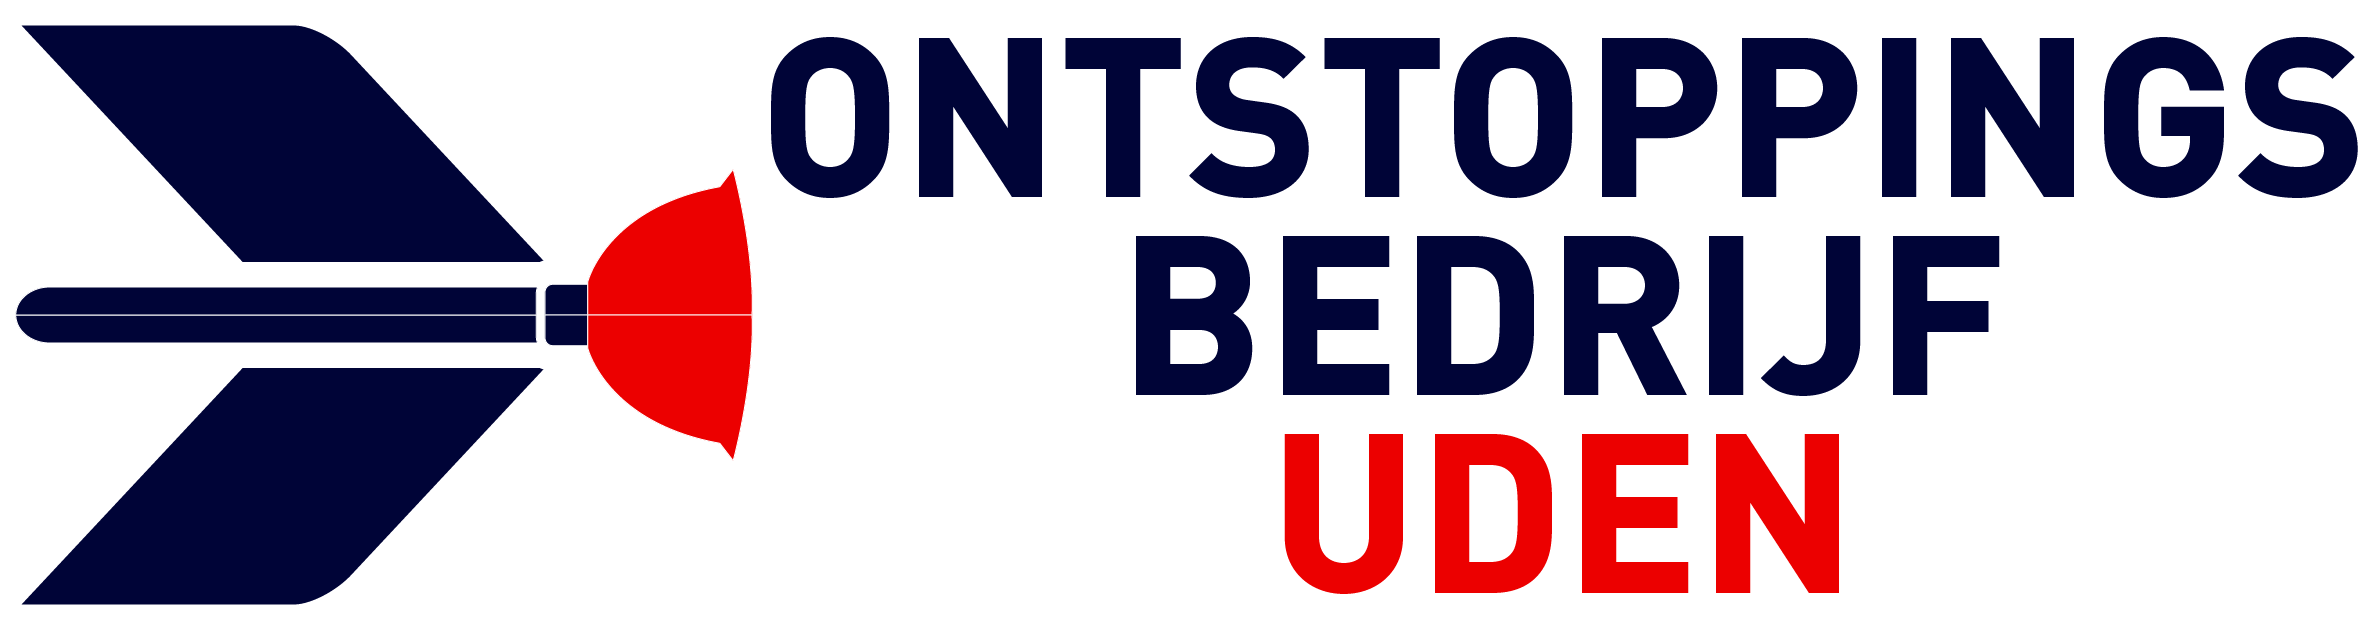 Ontstoppingsbedrijf Uden logo